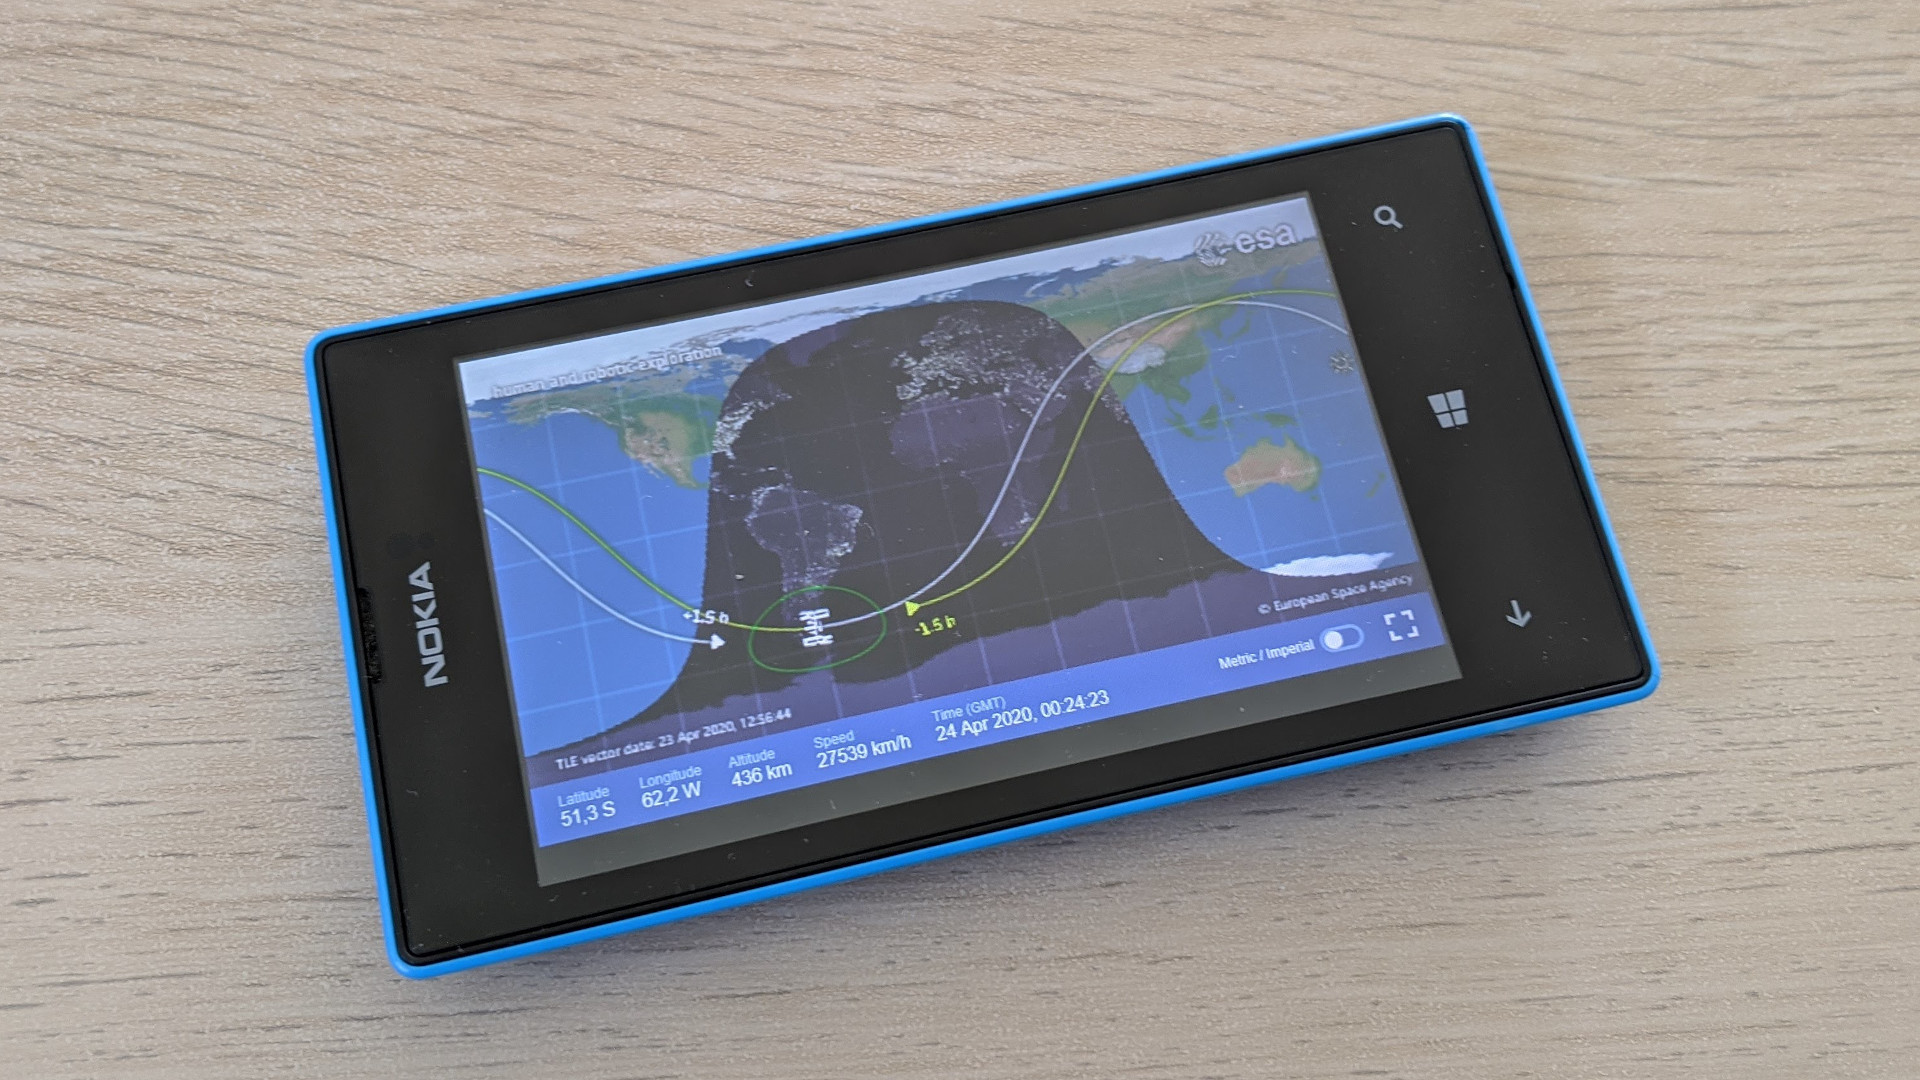 Sfondi Natalizi Nokia Lumia 520.Esa Iss Tracker On Nokia Lumia 520 New Screwdriver